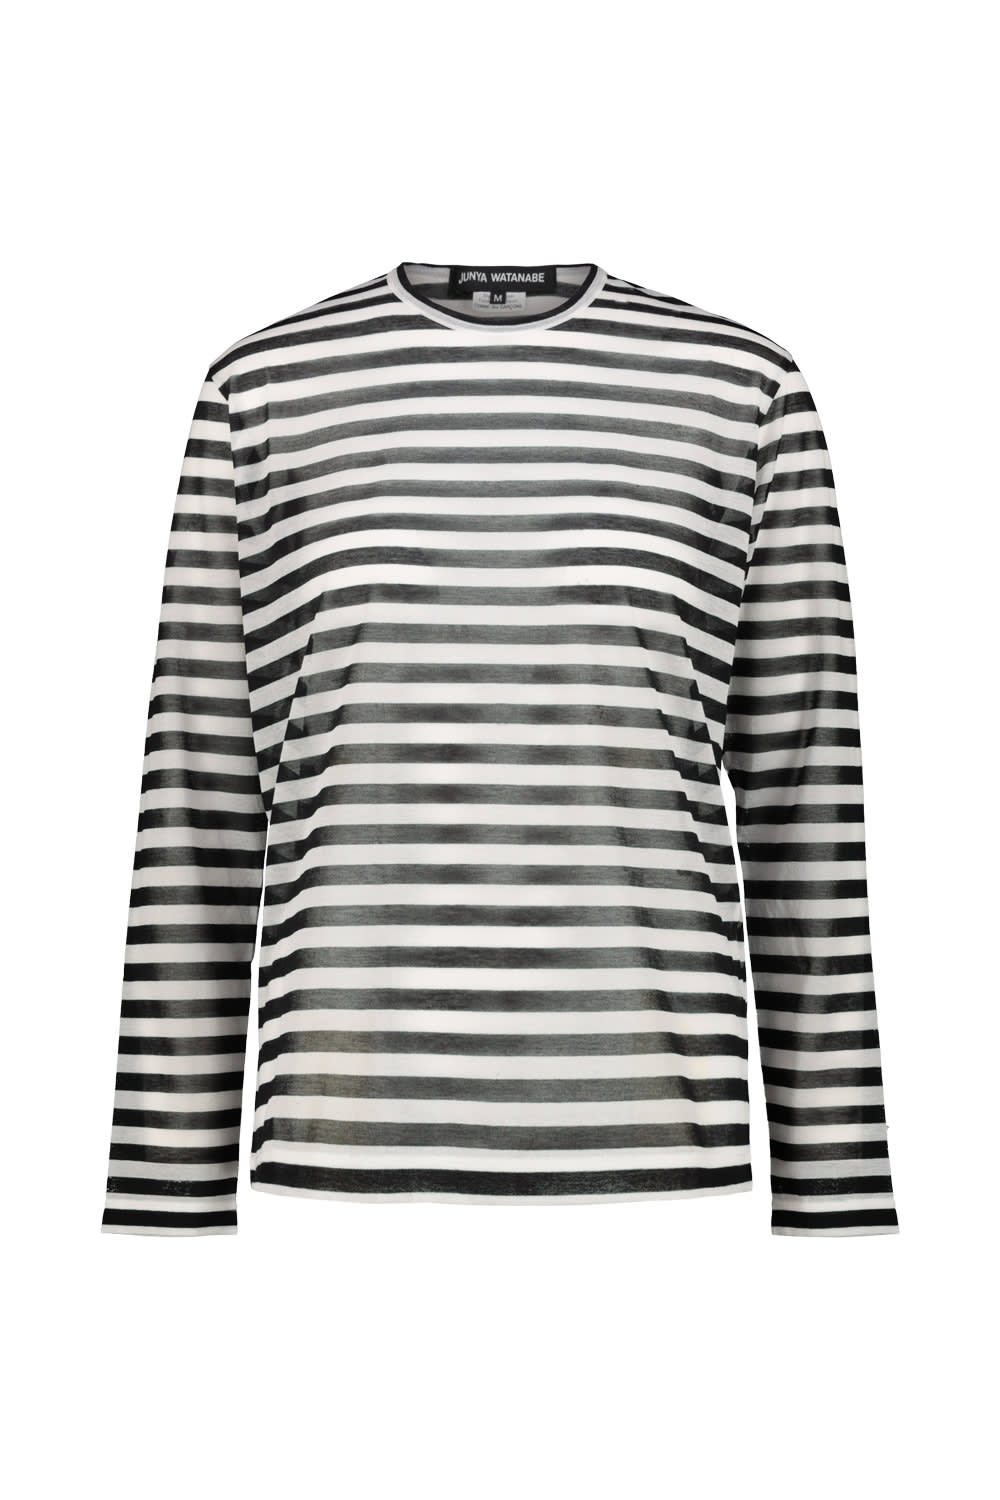 Junya Watanabe Striped T-shirt In Blk/wht Black/white